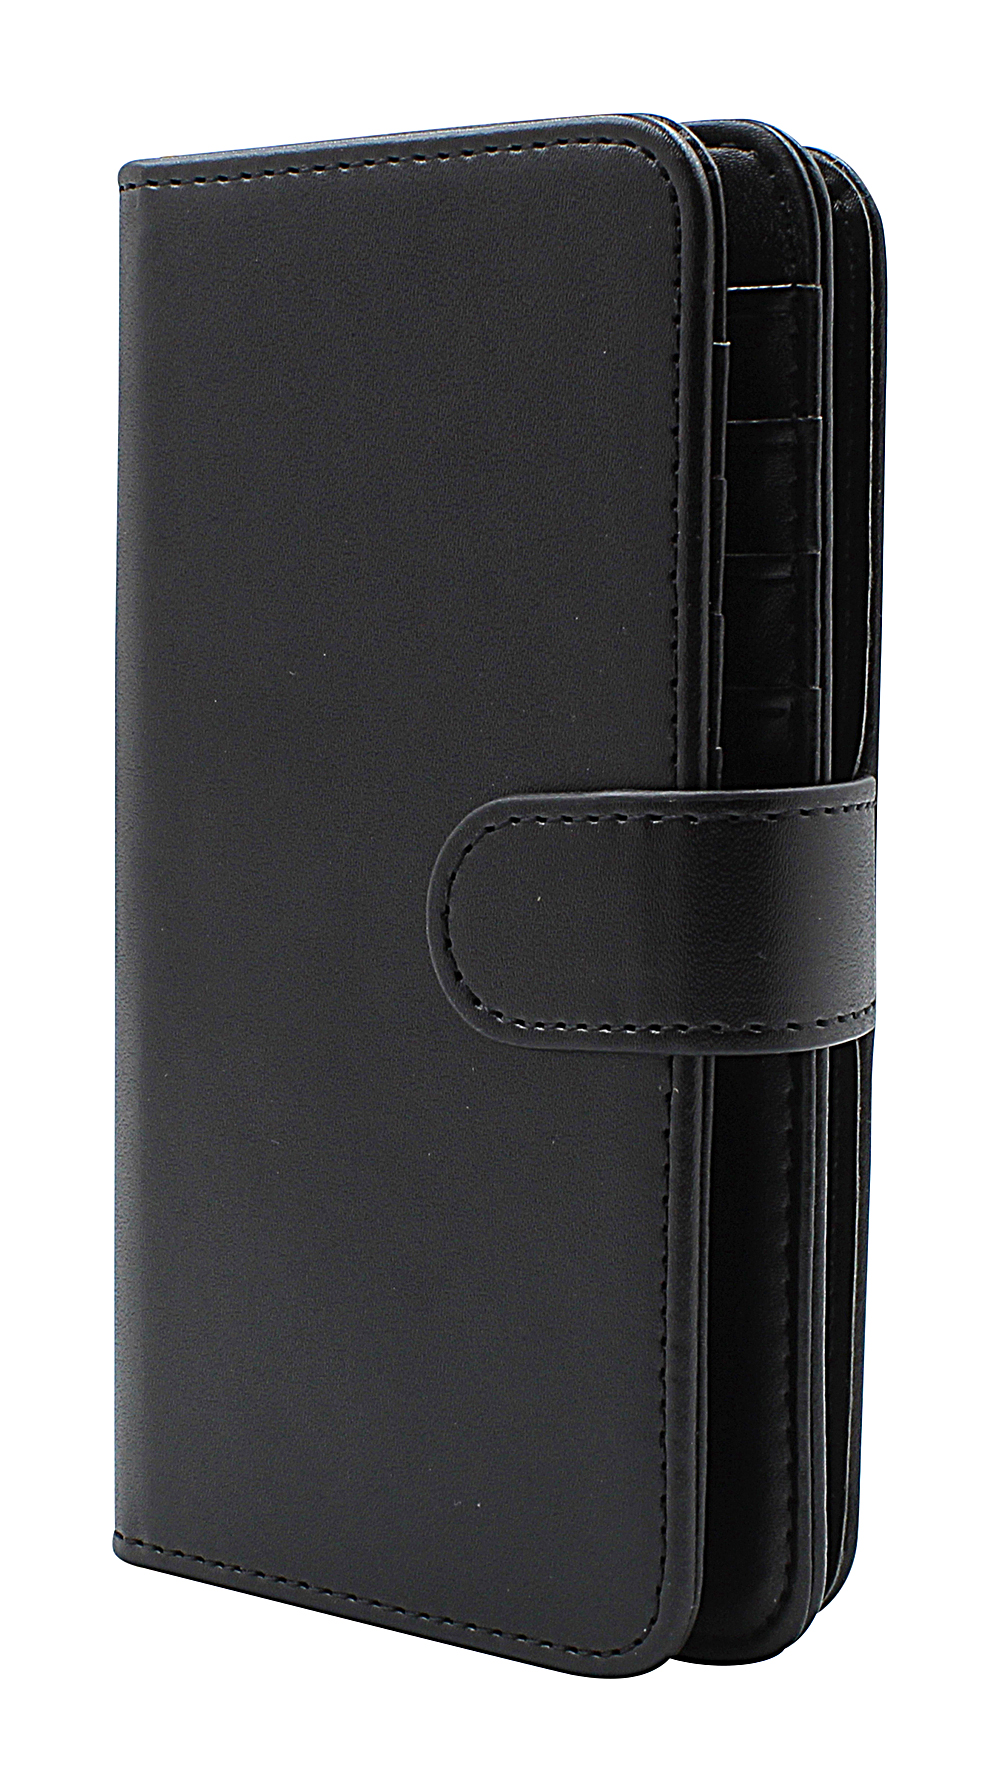 Skimblocker XL Magnet Wallet Samsung Galaxy S4 (i9500)